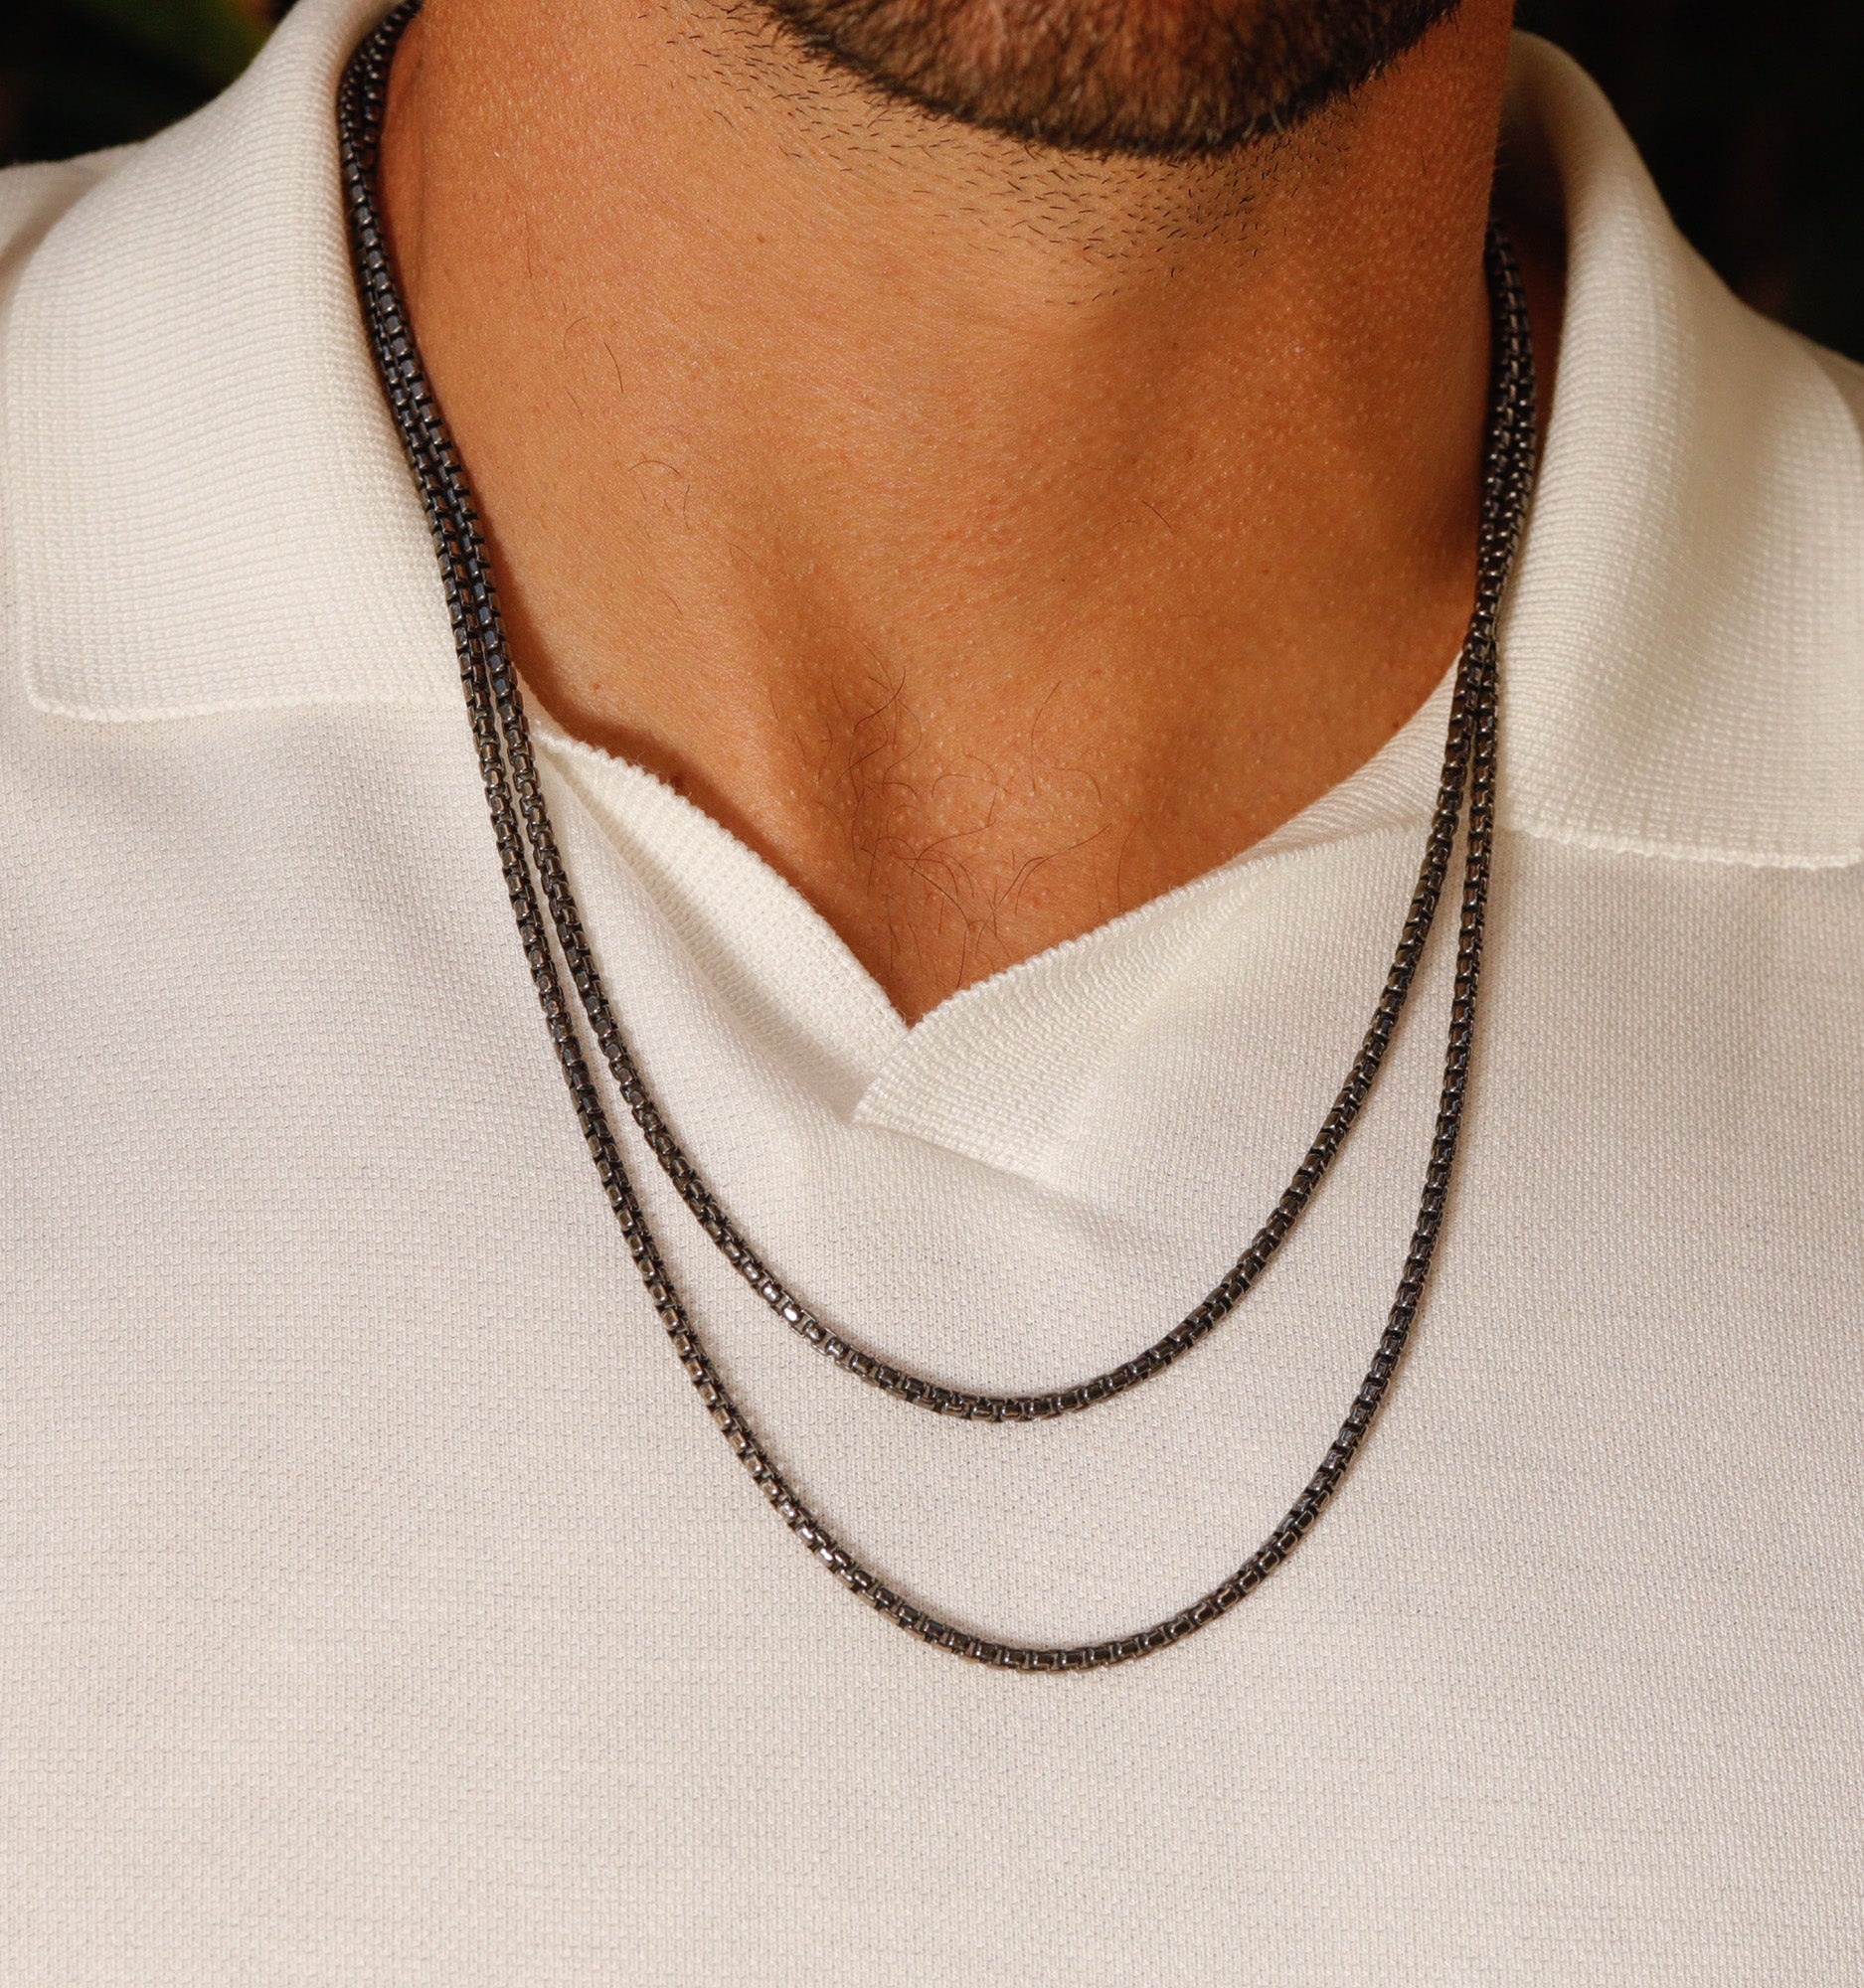 Box Chain Necklace in Black Rhodium